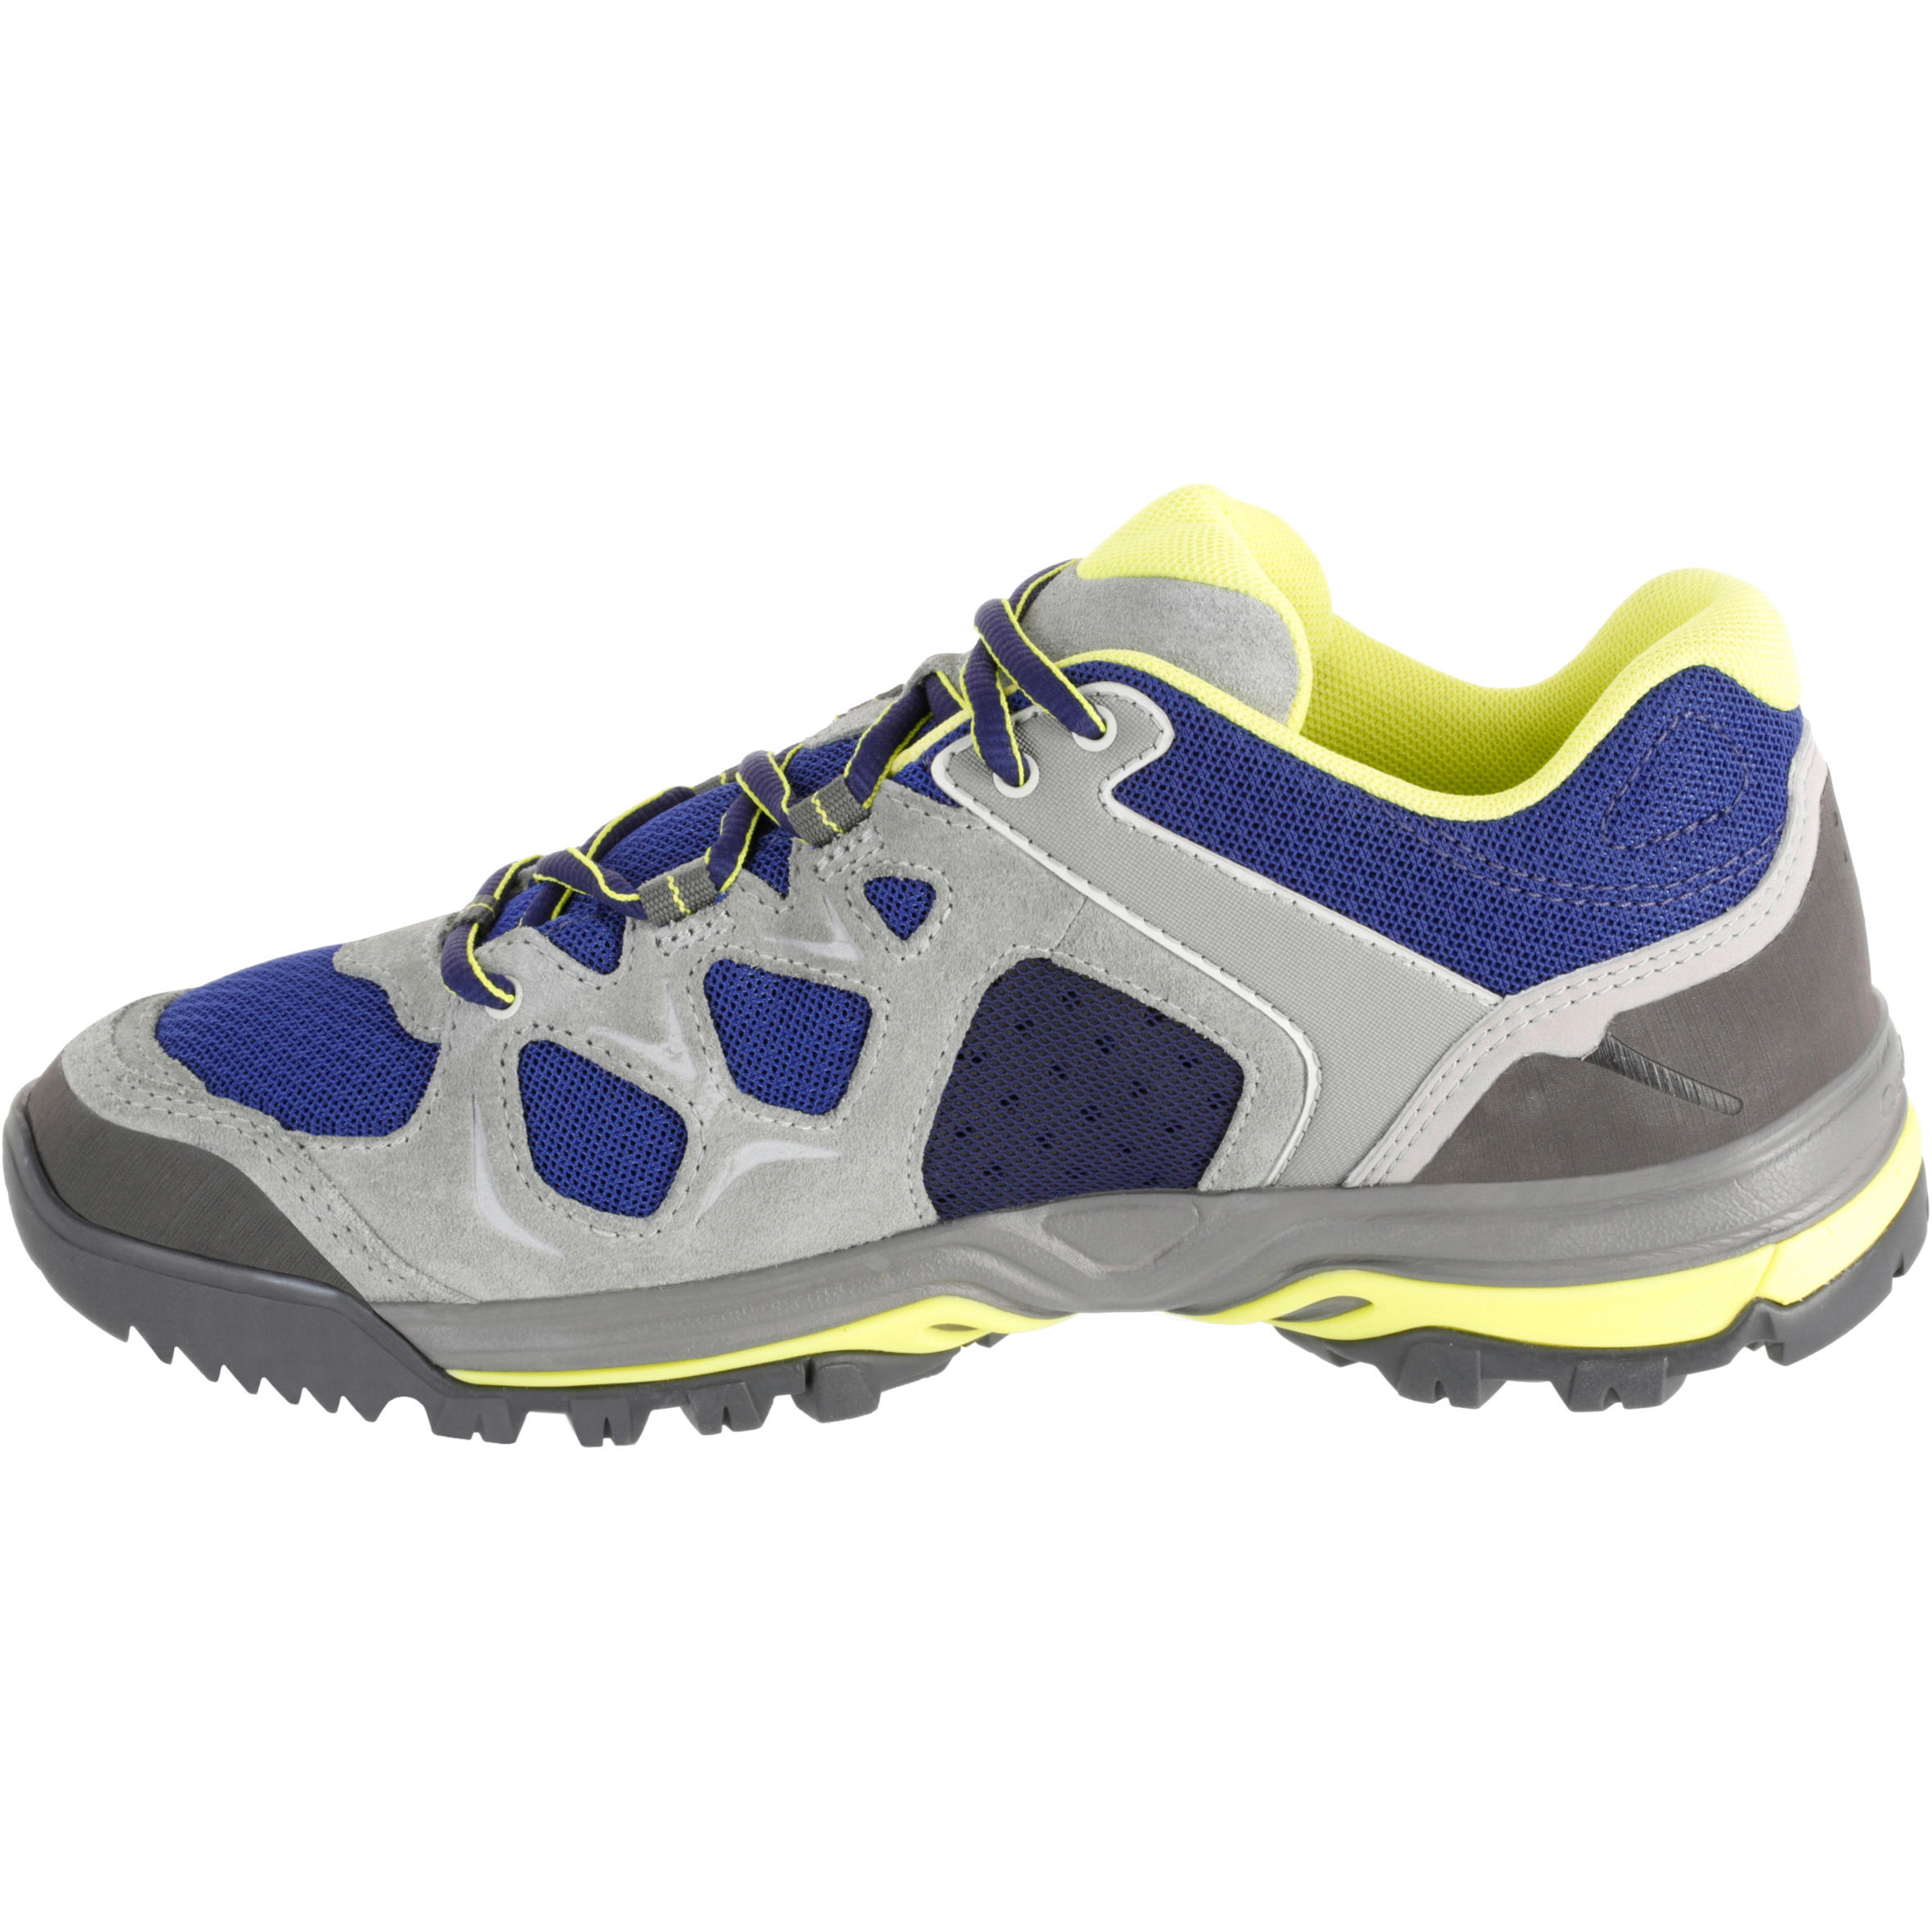 Forclaz Flex 3 Women's Hiking Boots - Blue/Grey 3/17